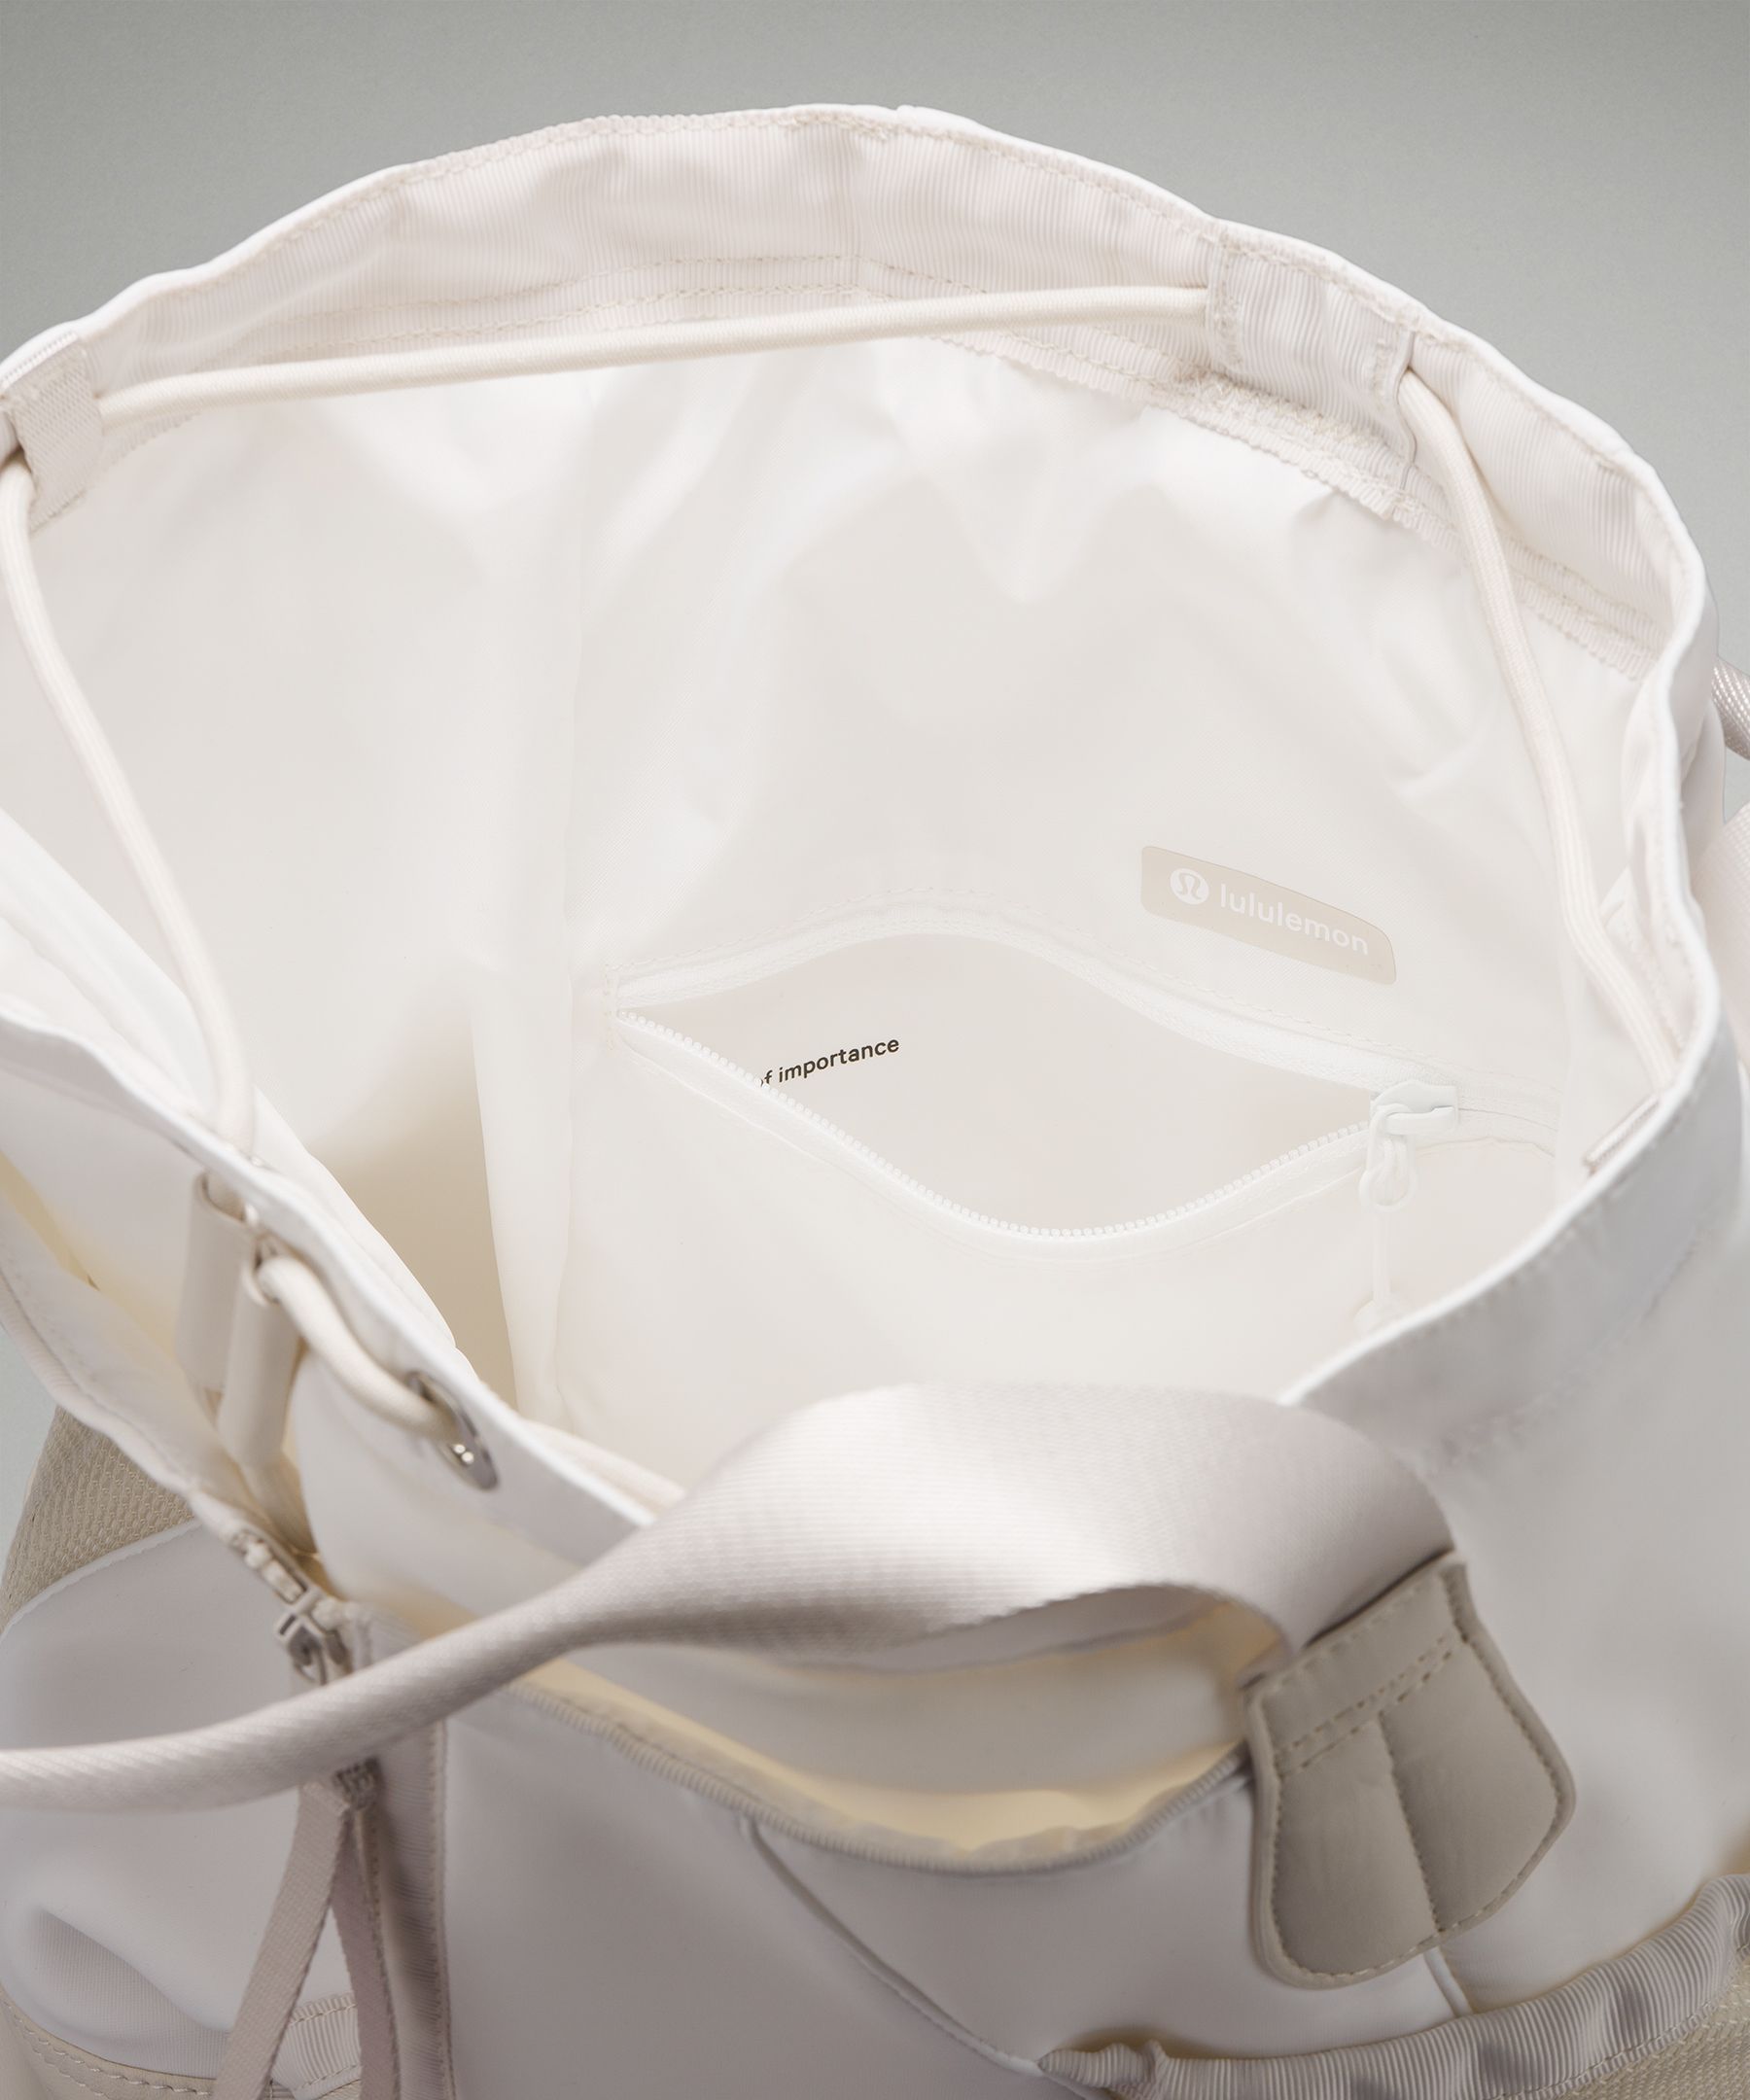 Lululemon Tennis Rally Bag 21L - White/White Opal